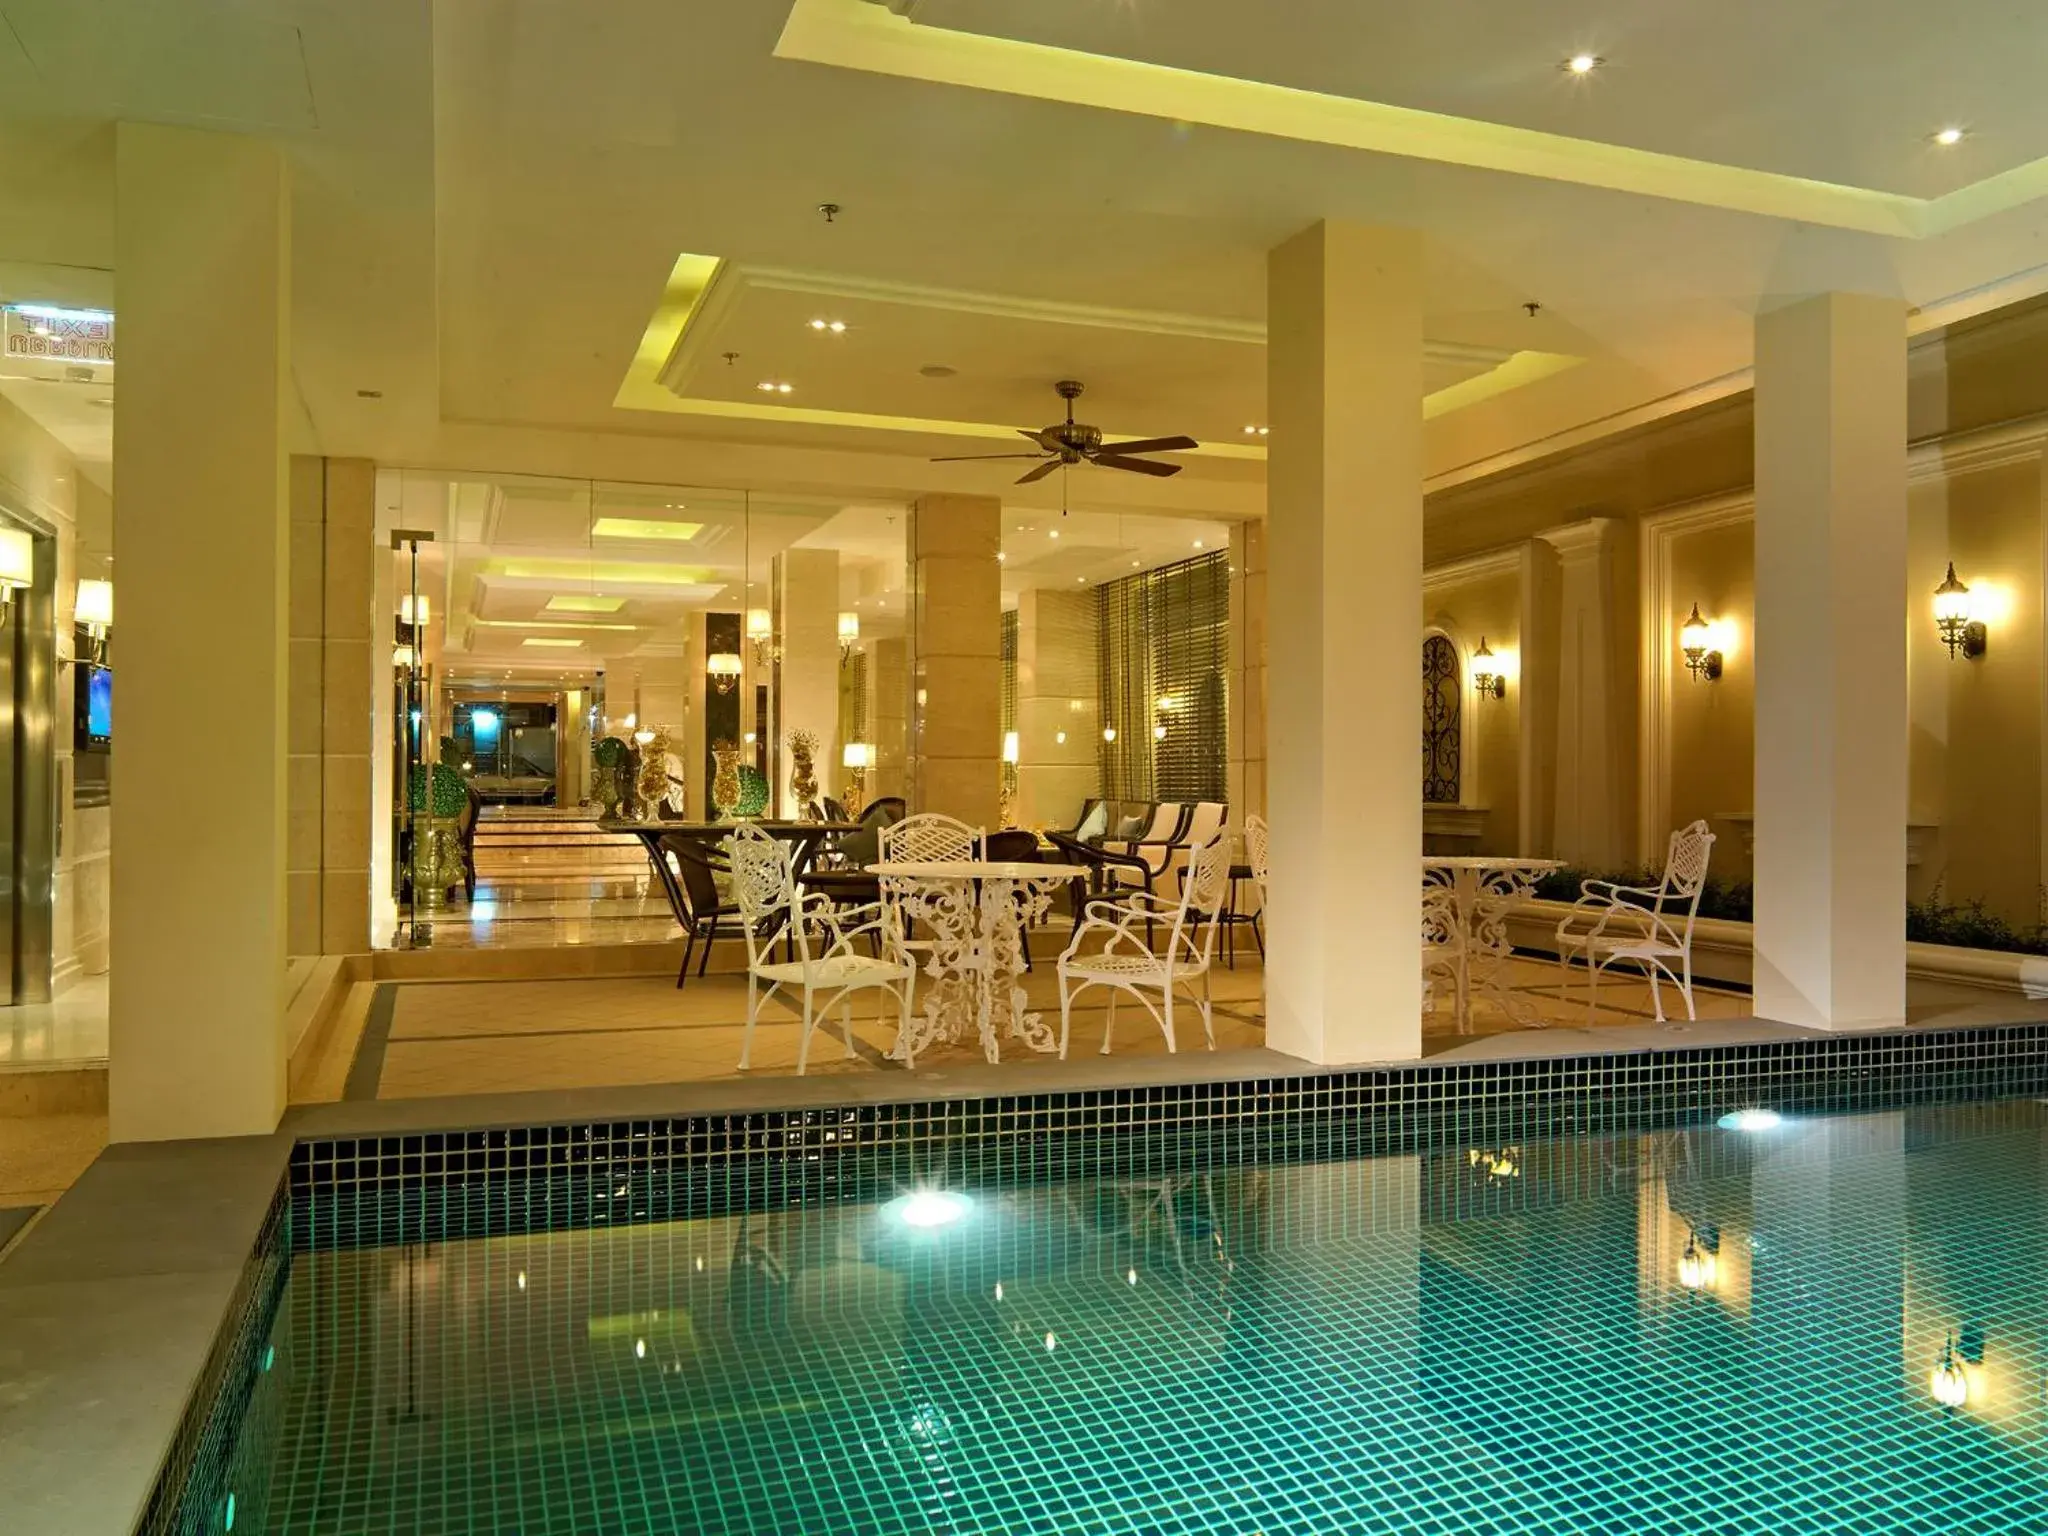 Swimming Pool in Gulliver's Tavern Hotel